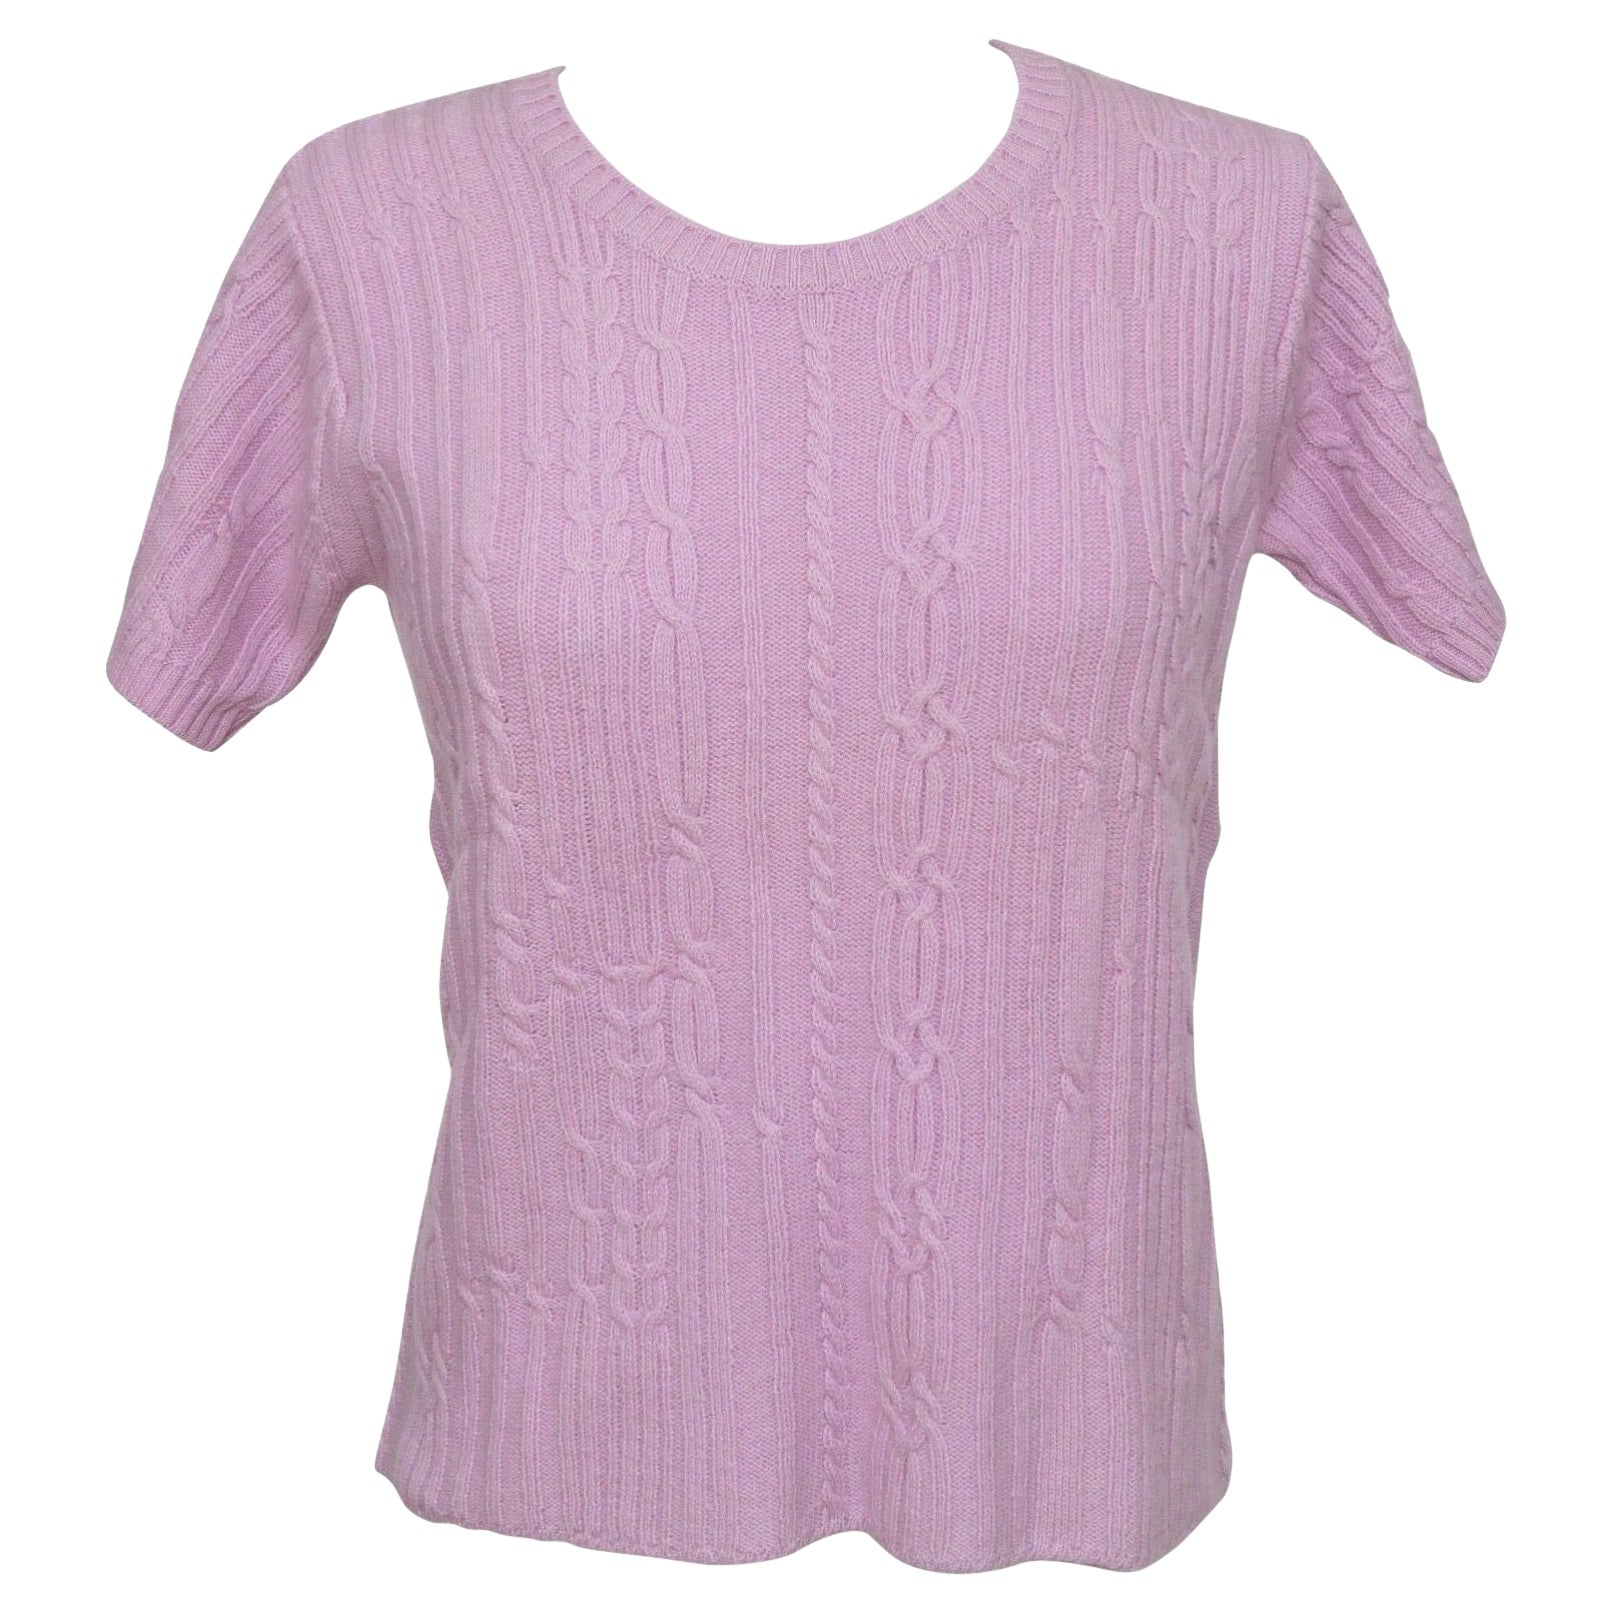 Chloé Chloe Sweater Knit Short Sleeve Top Pink Crew Neck Wool Sz S